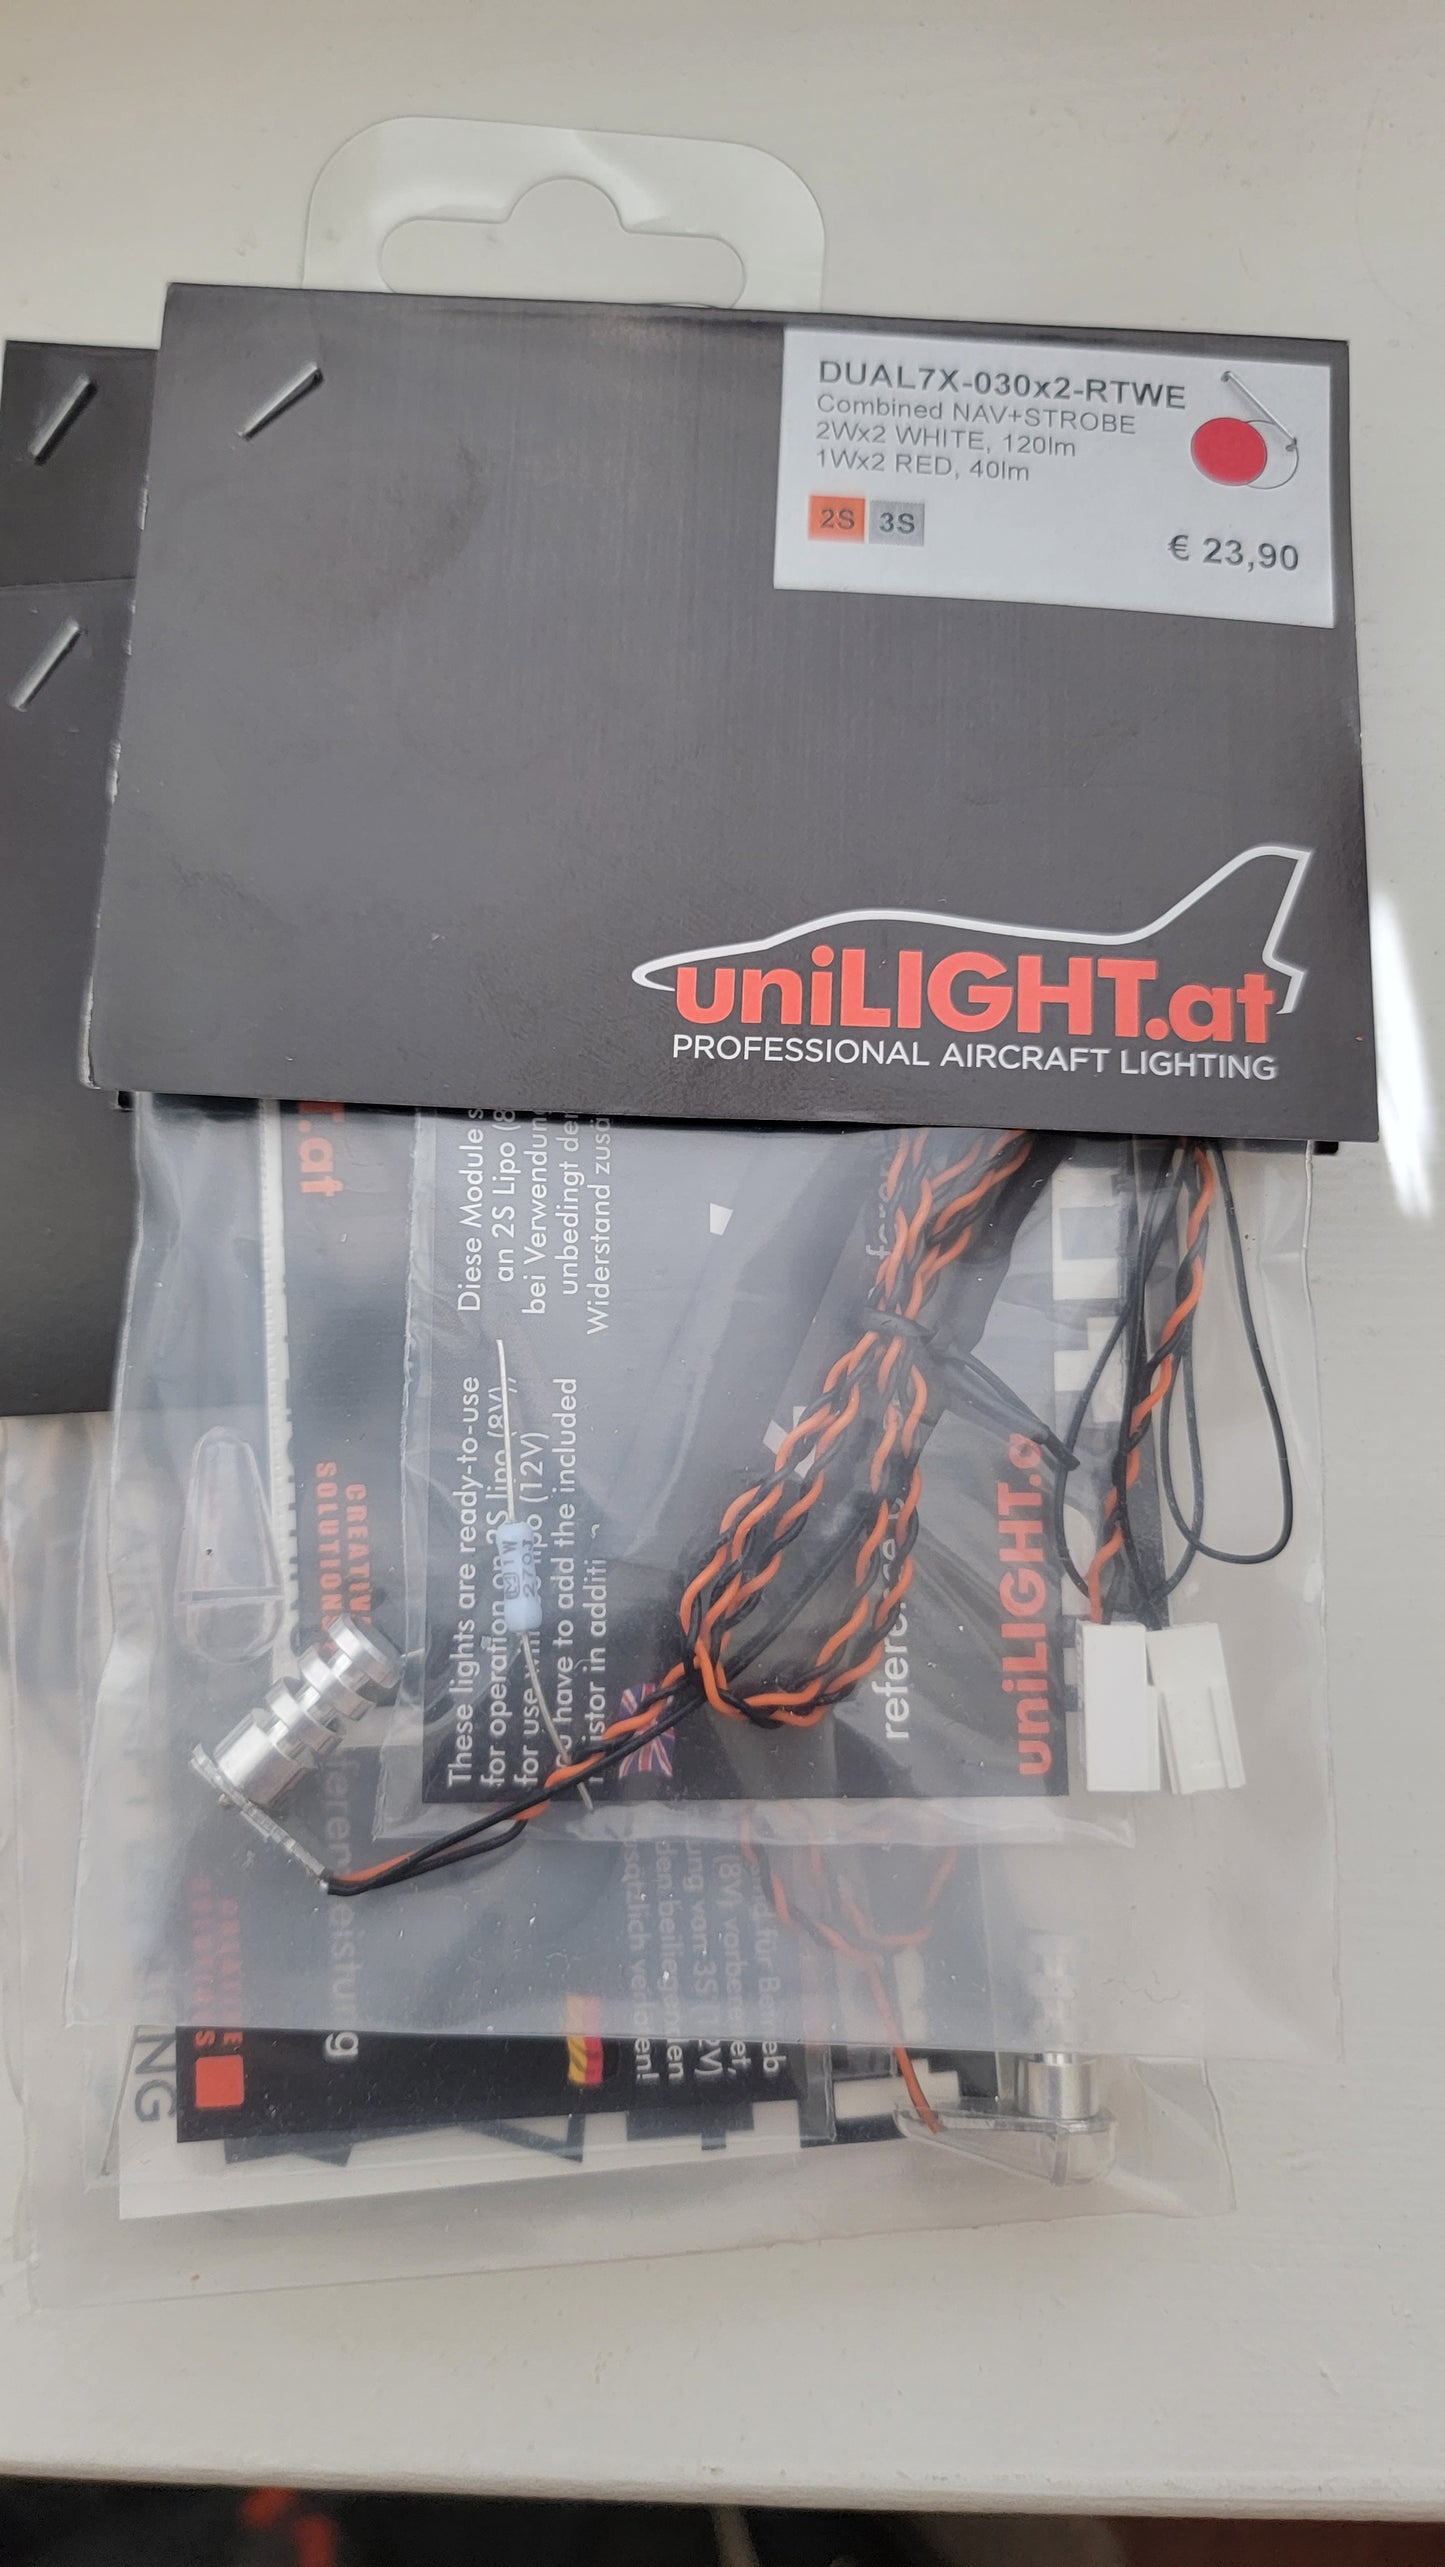 Unilight Dual 7X 030x2 nav and strobe